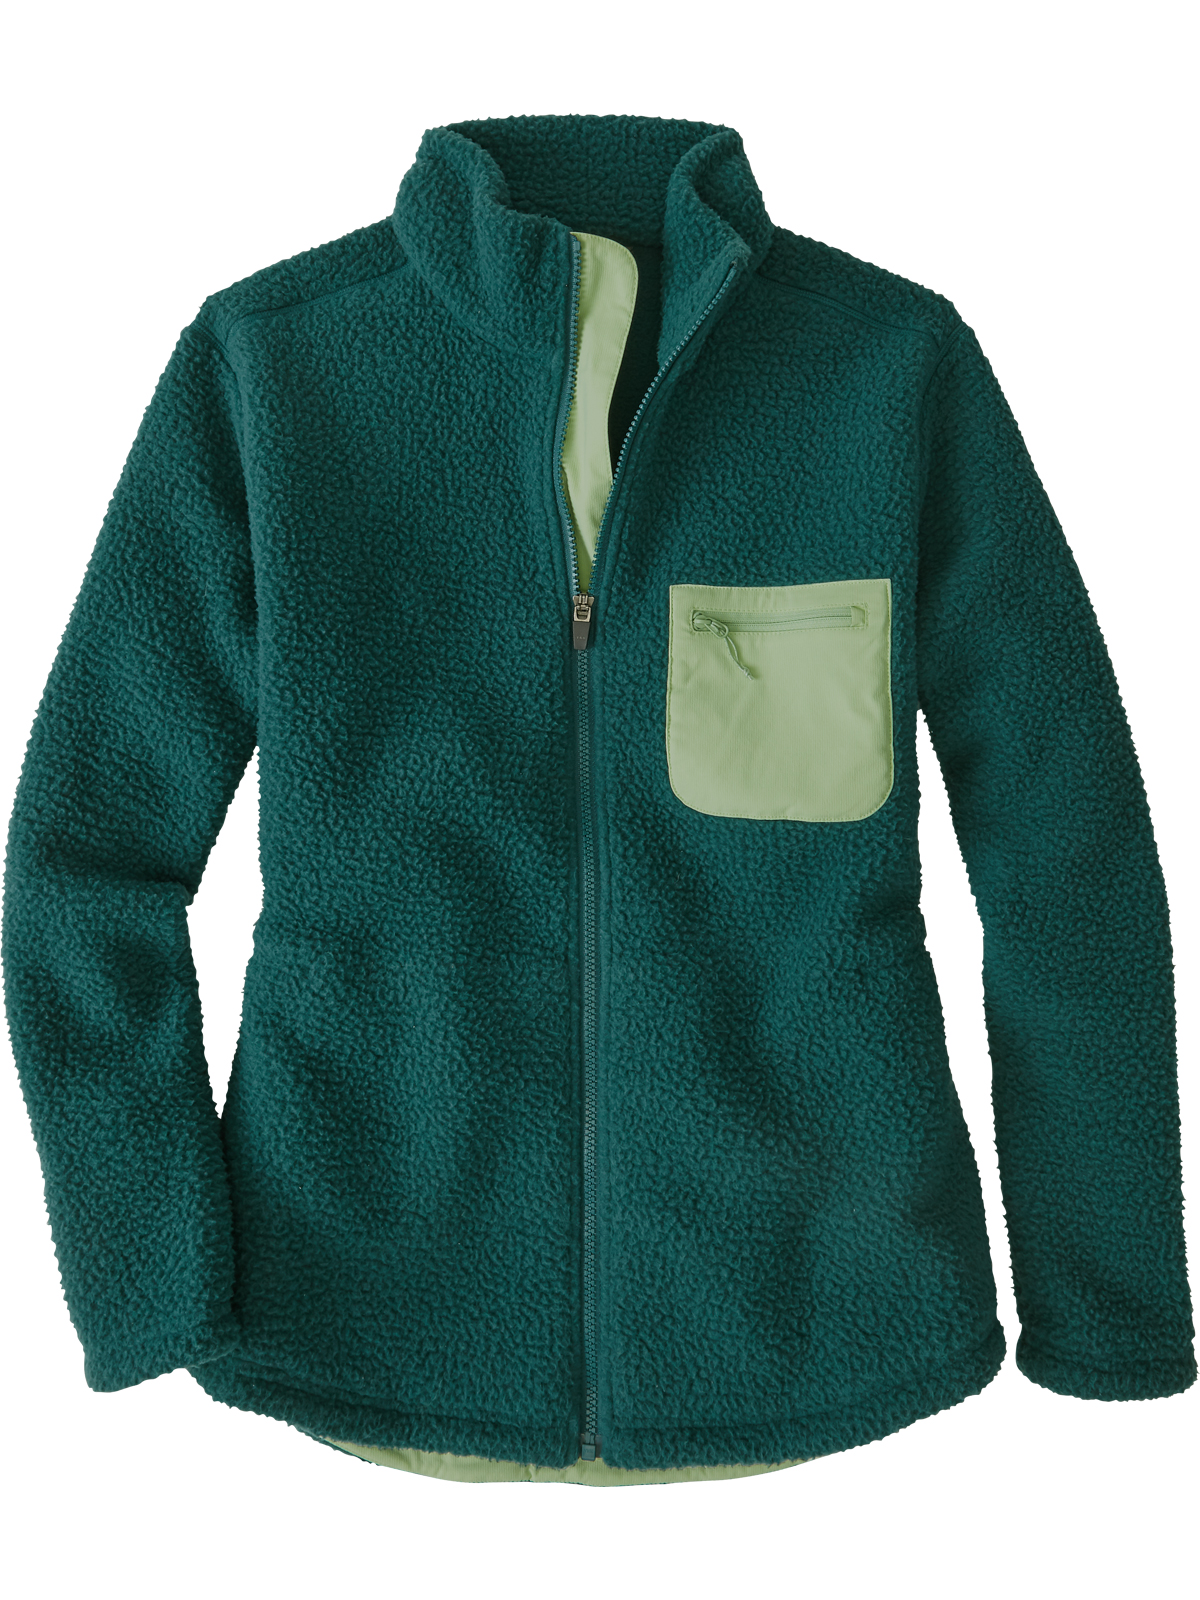 Womens Fleece Lined Reversible Jacket: Annapurna